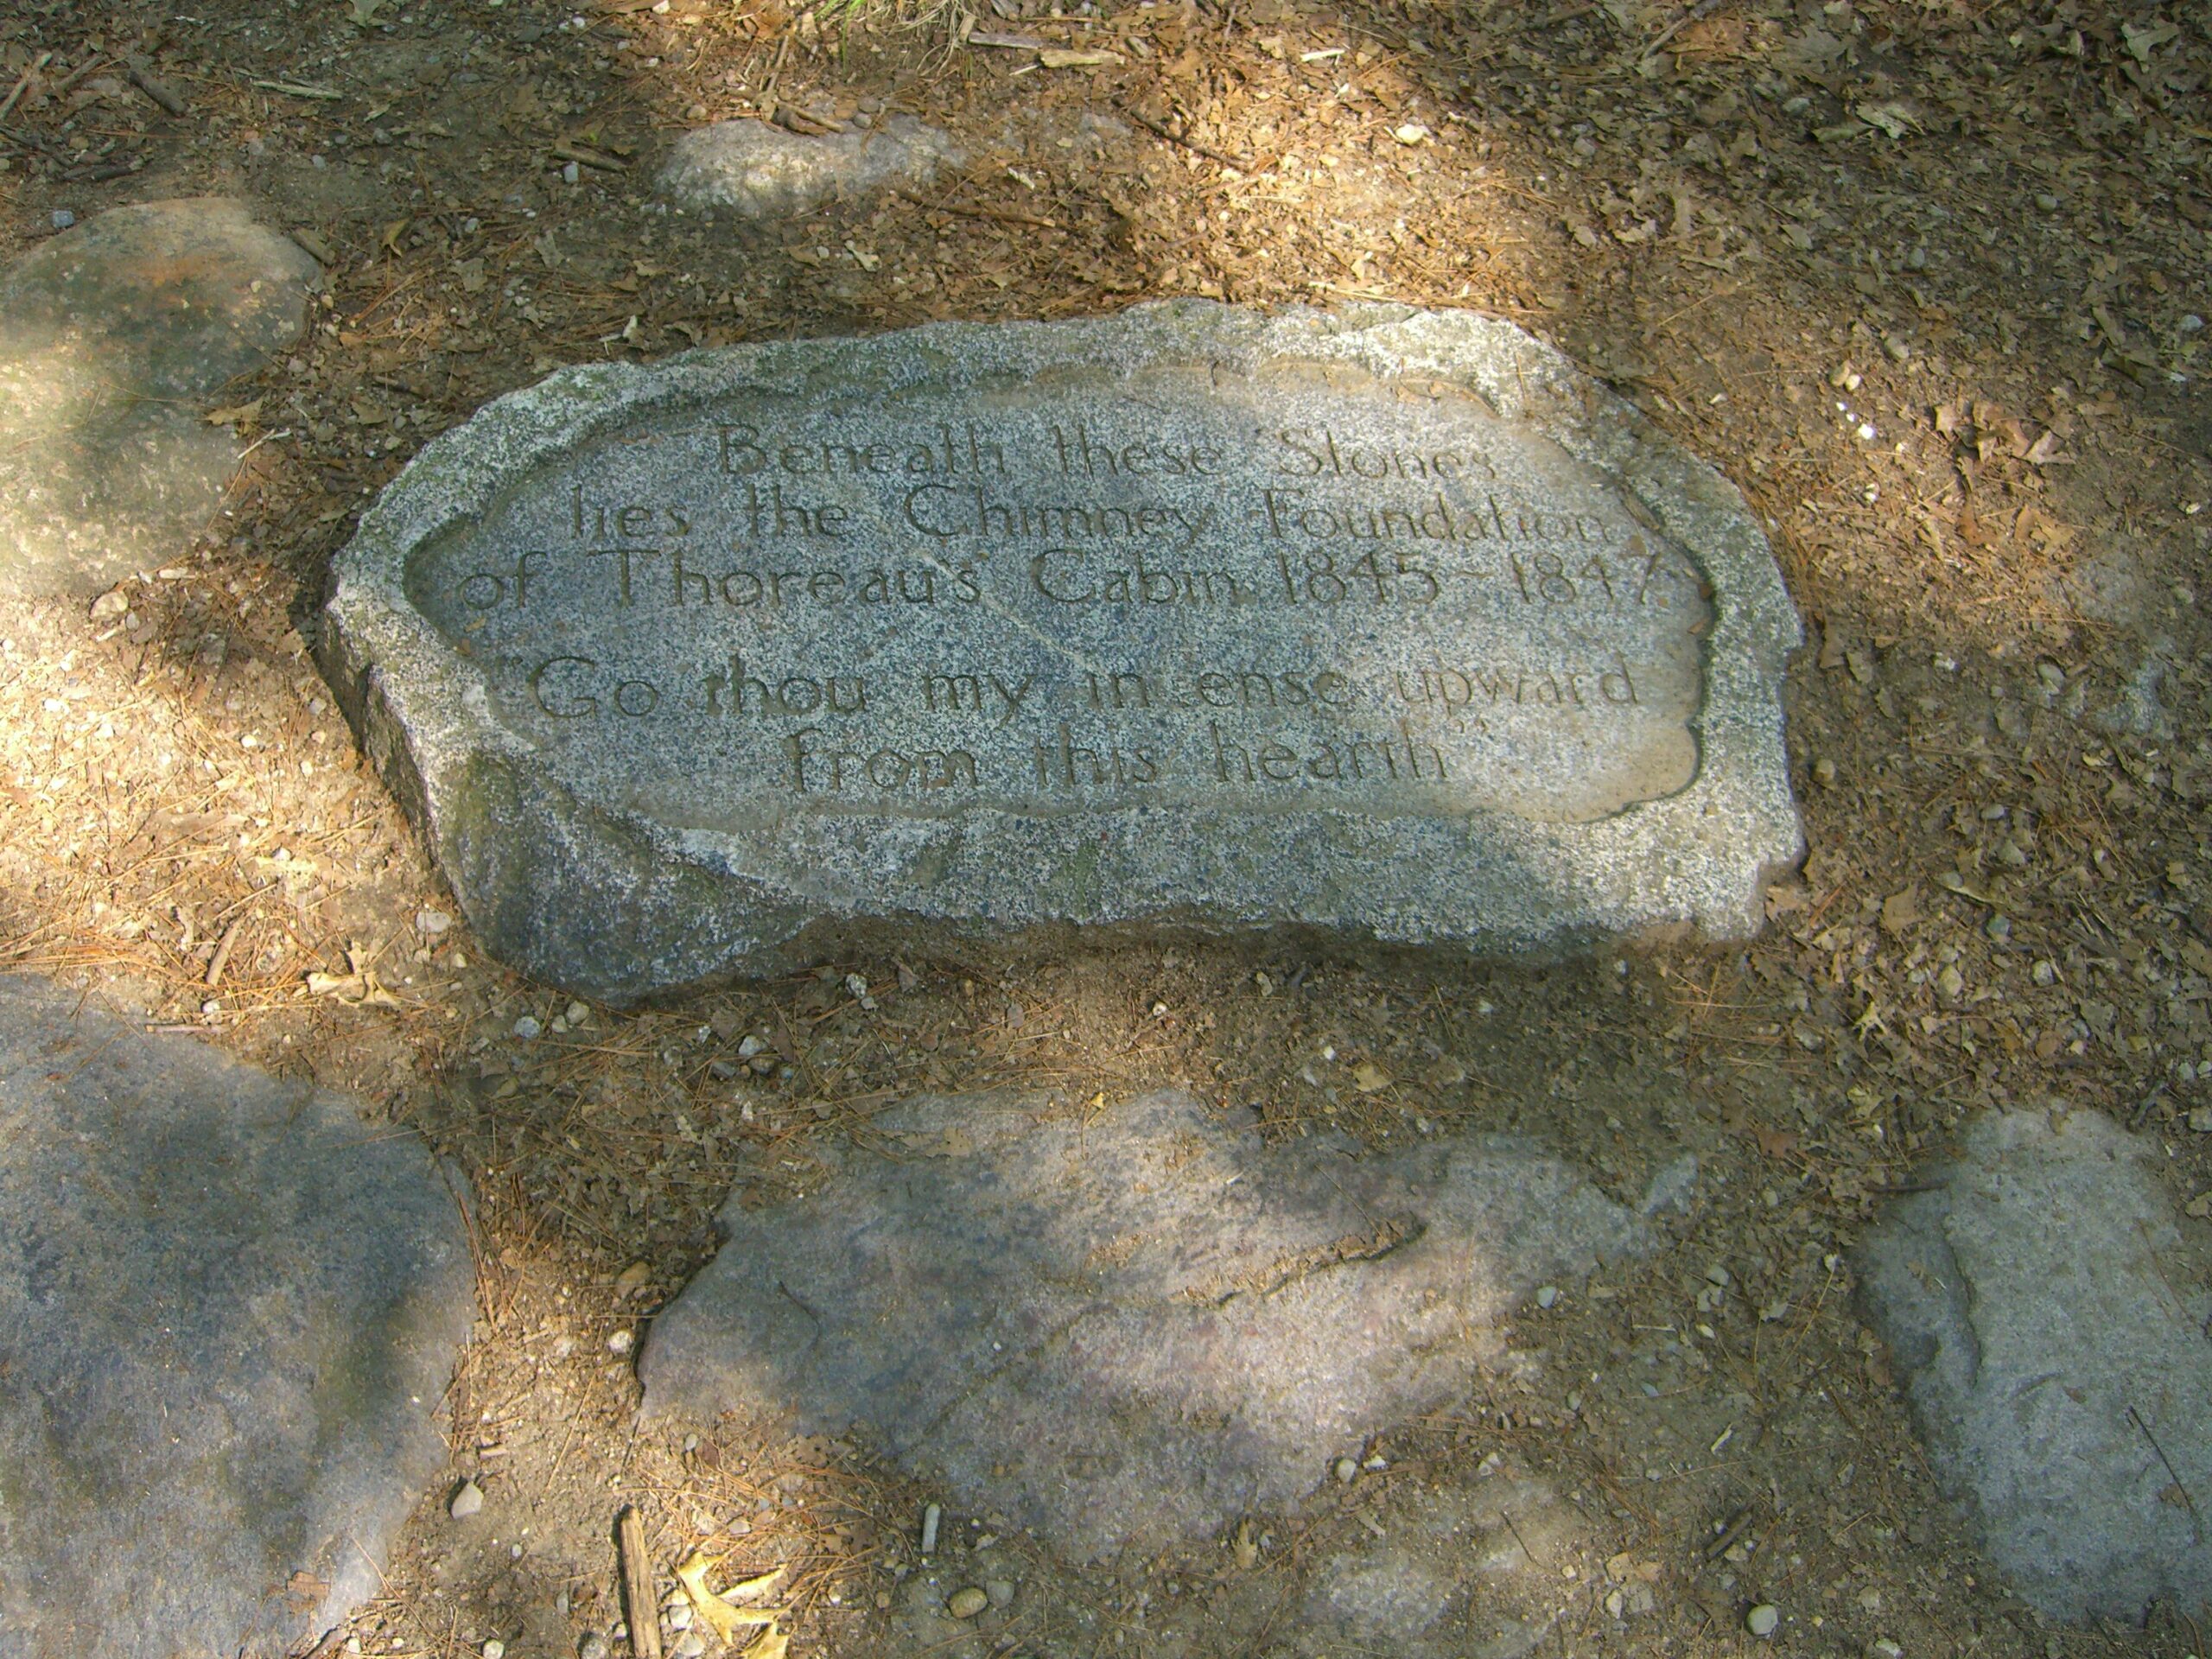 A stone marks the original site of Thoreau's cabin near Walden Pond.